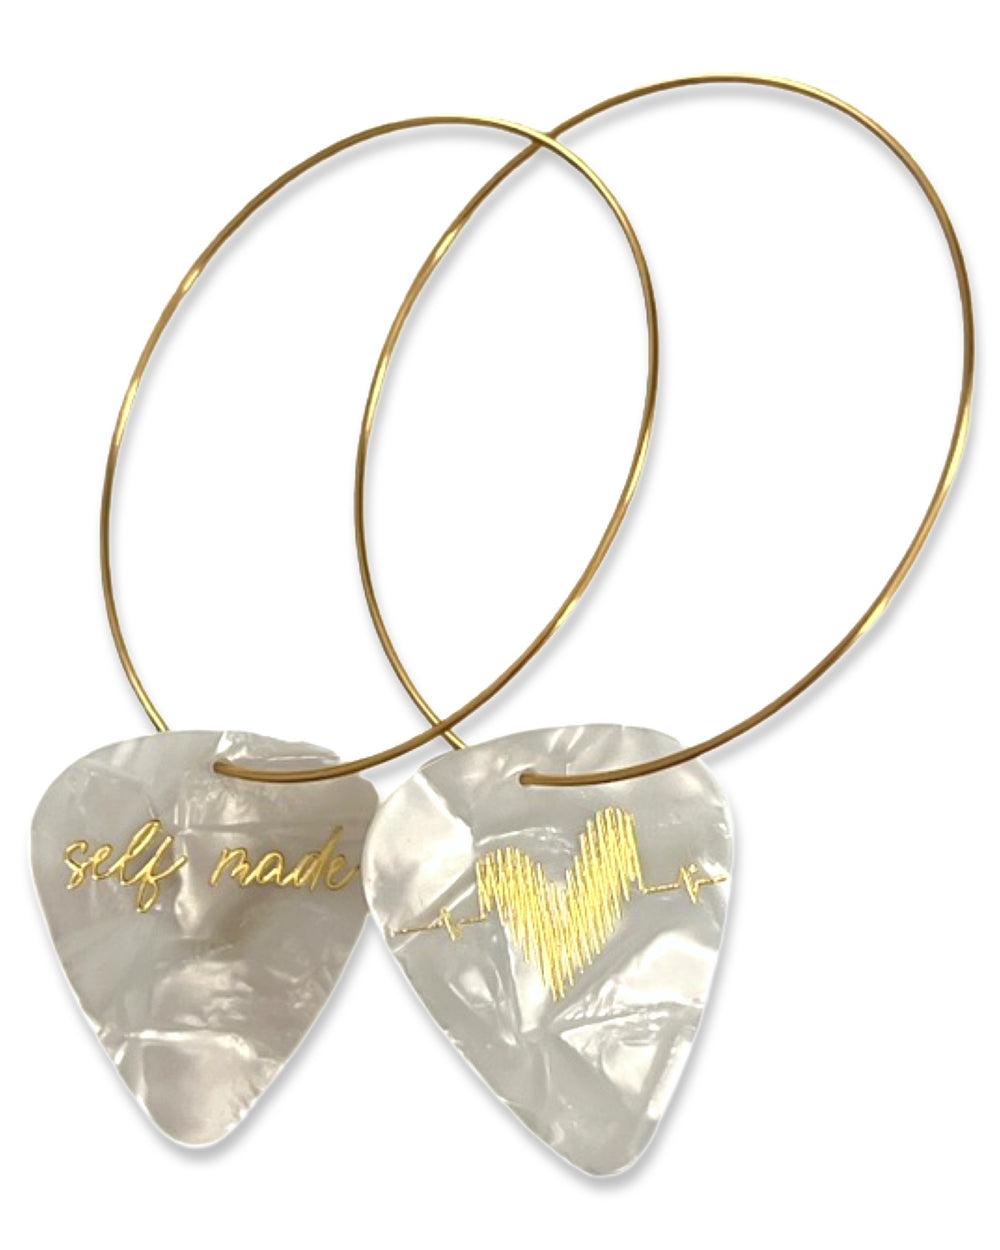 WS Self Made White Pearl Gold Reversible Single Guitar Pick Earrings